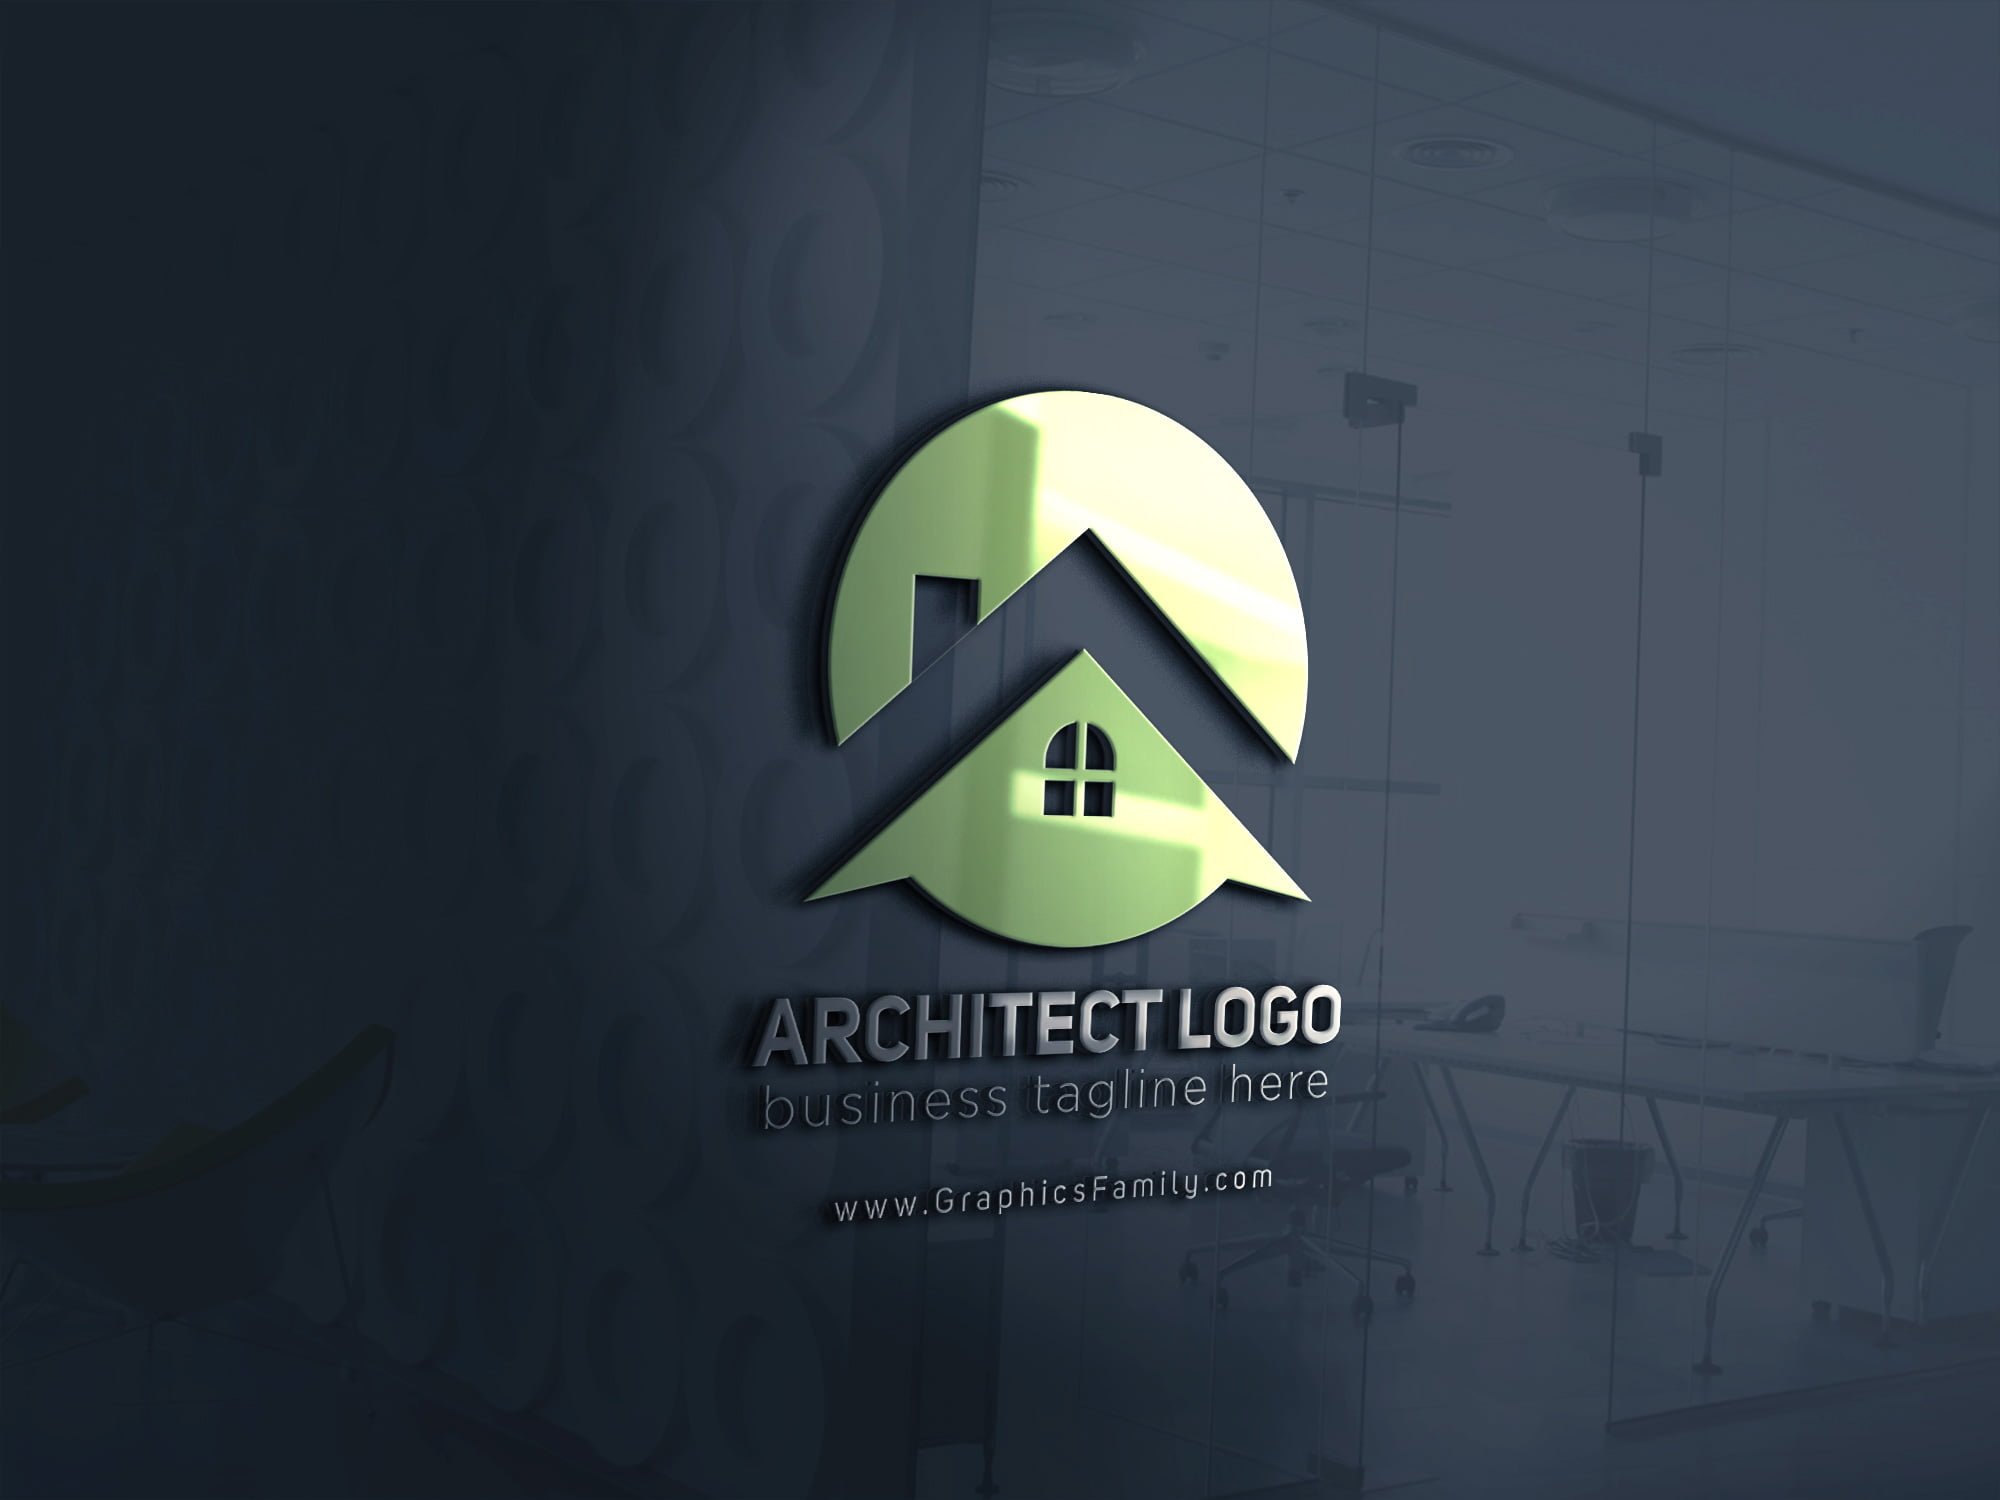 architecture design logo